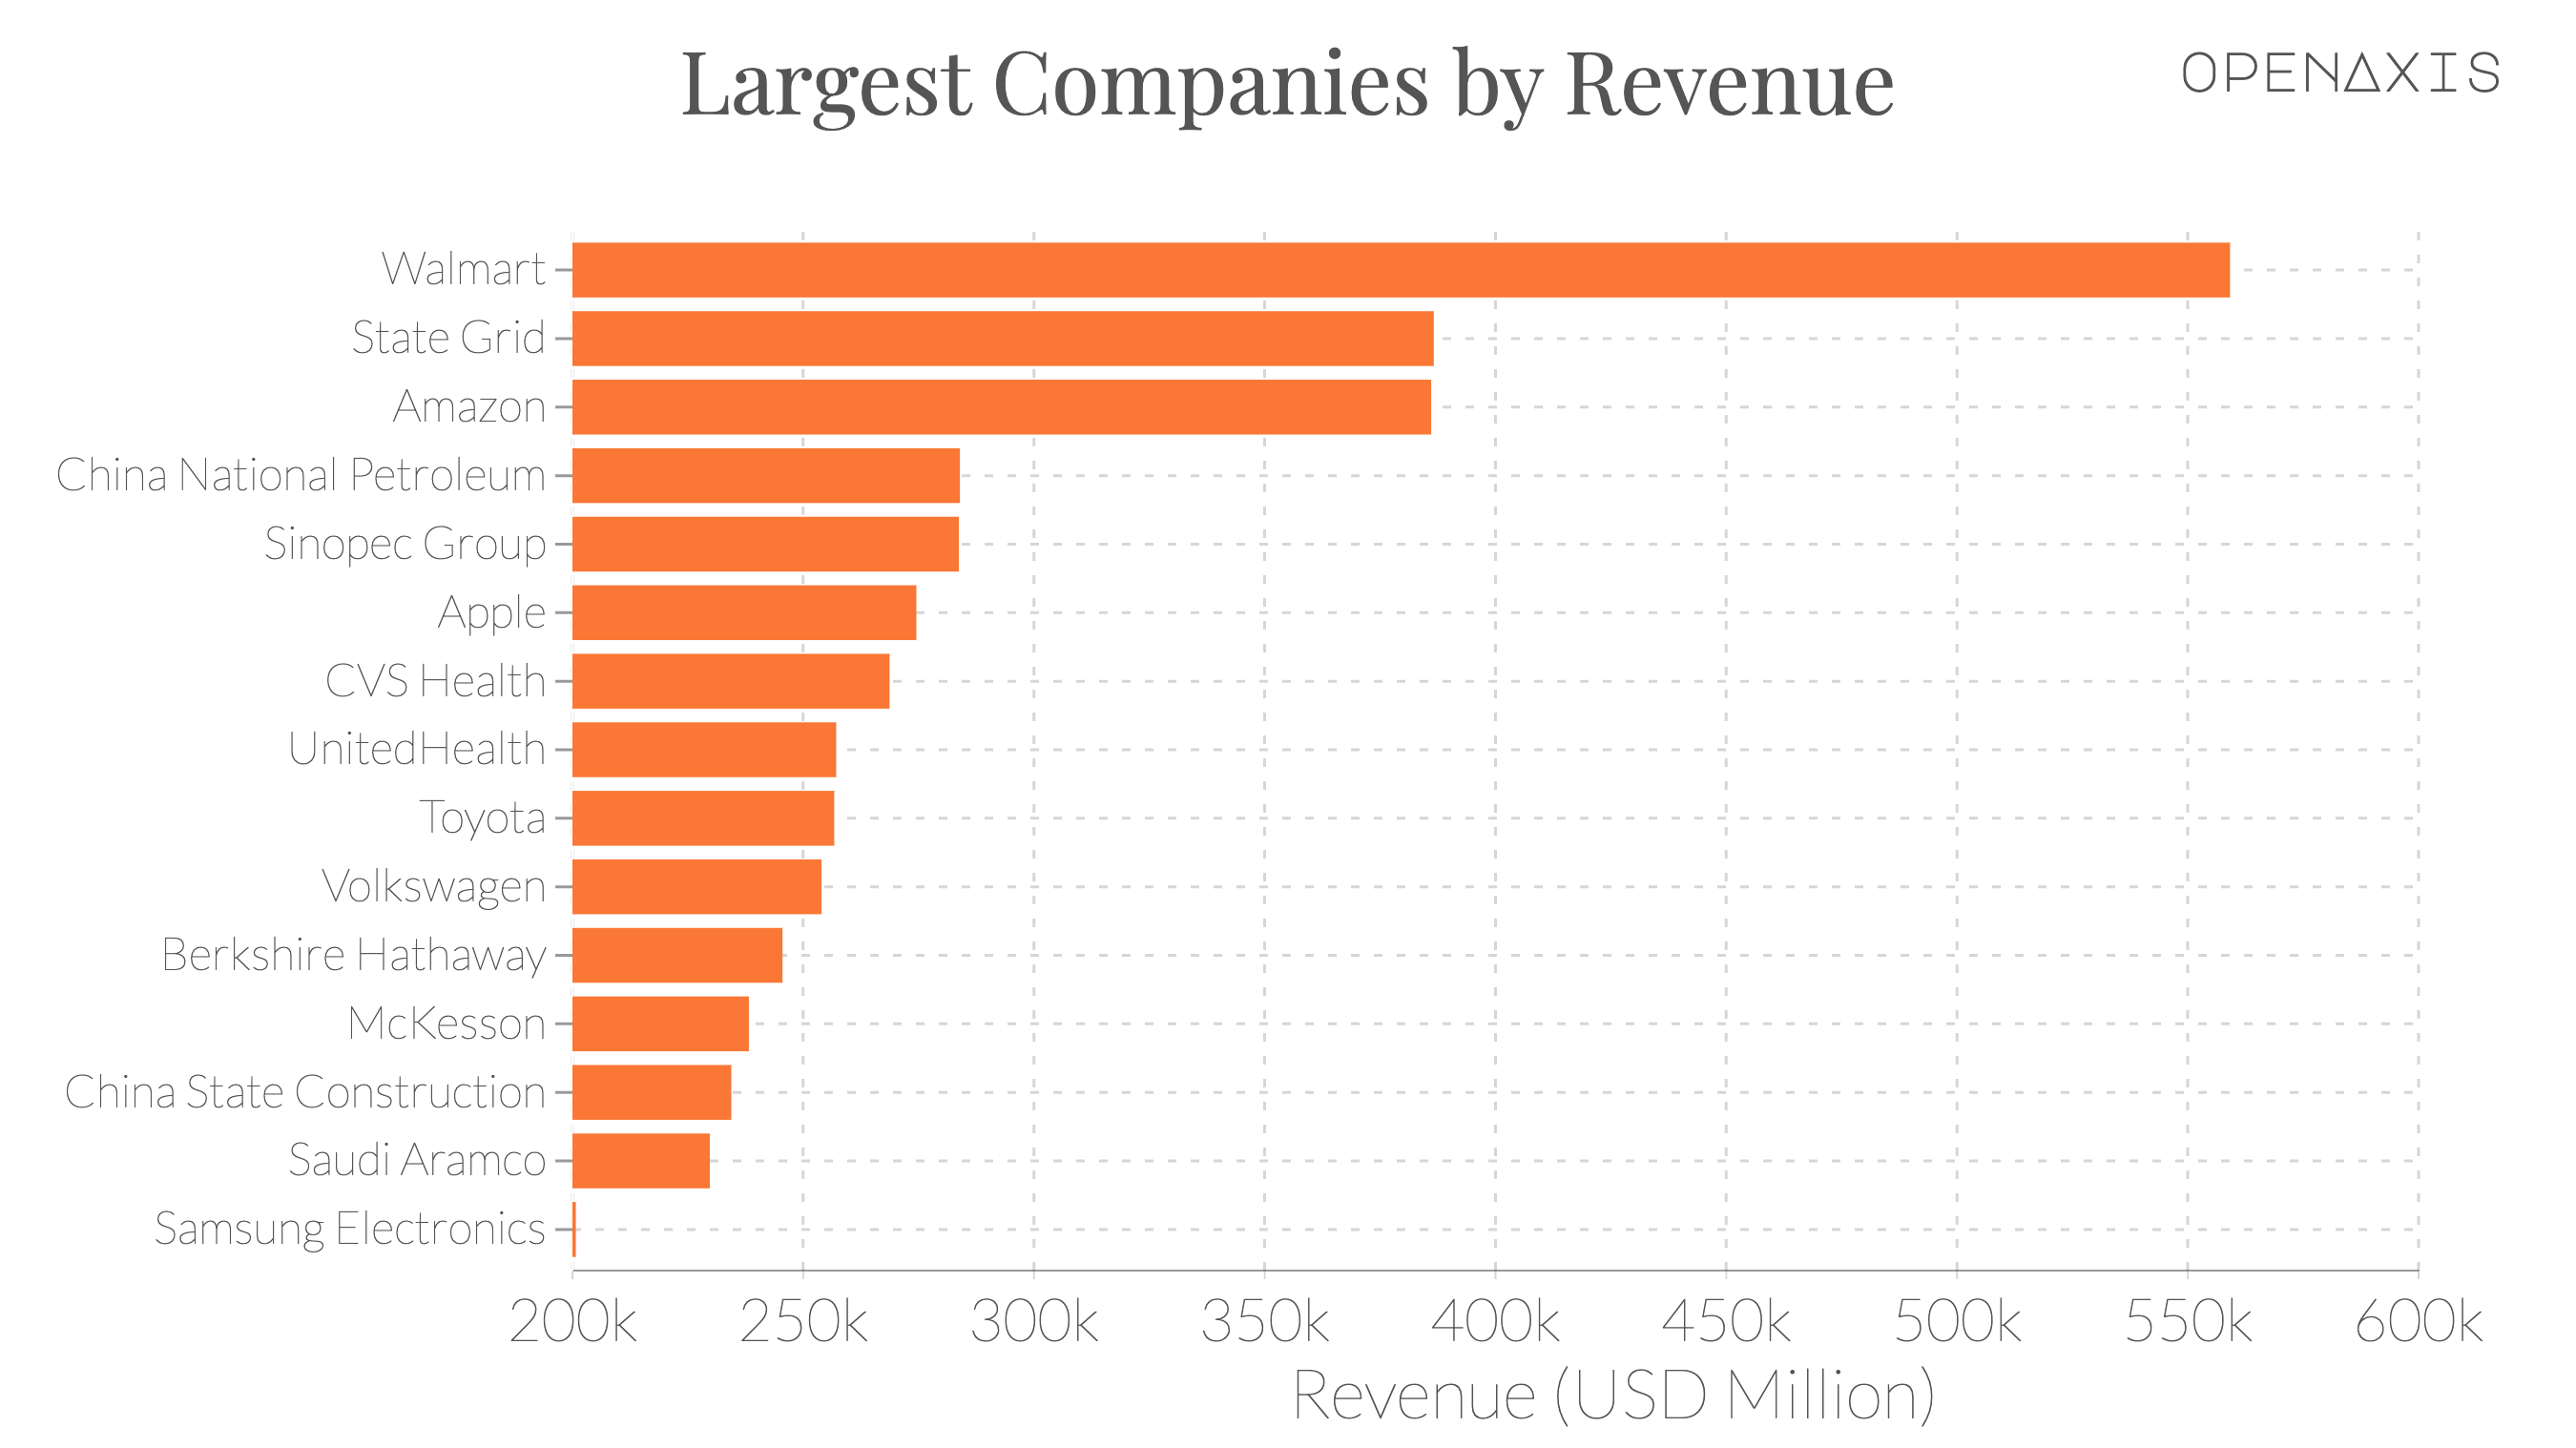 "Largest Companies by Revenue"